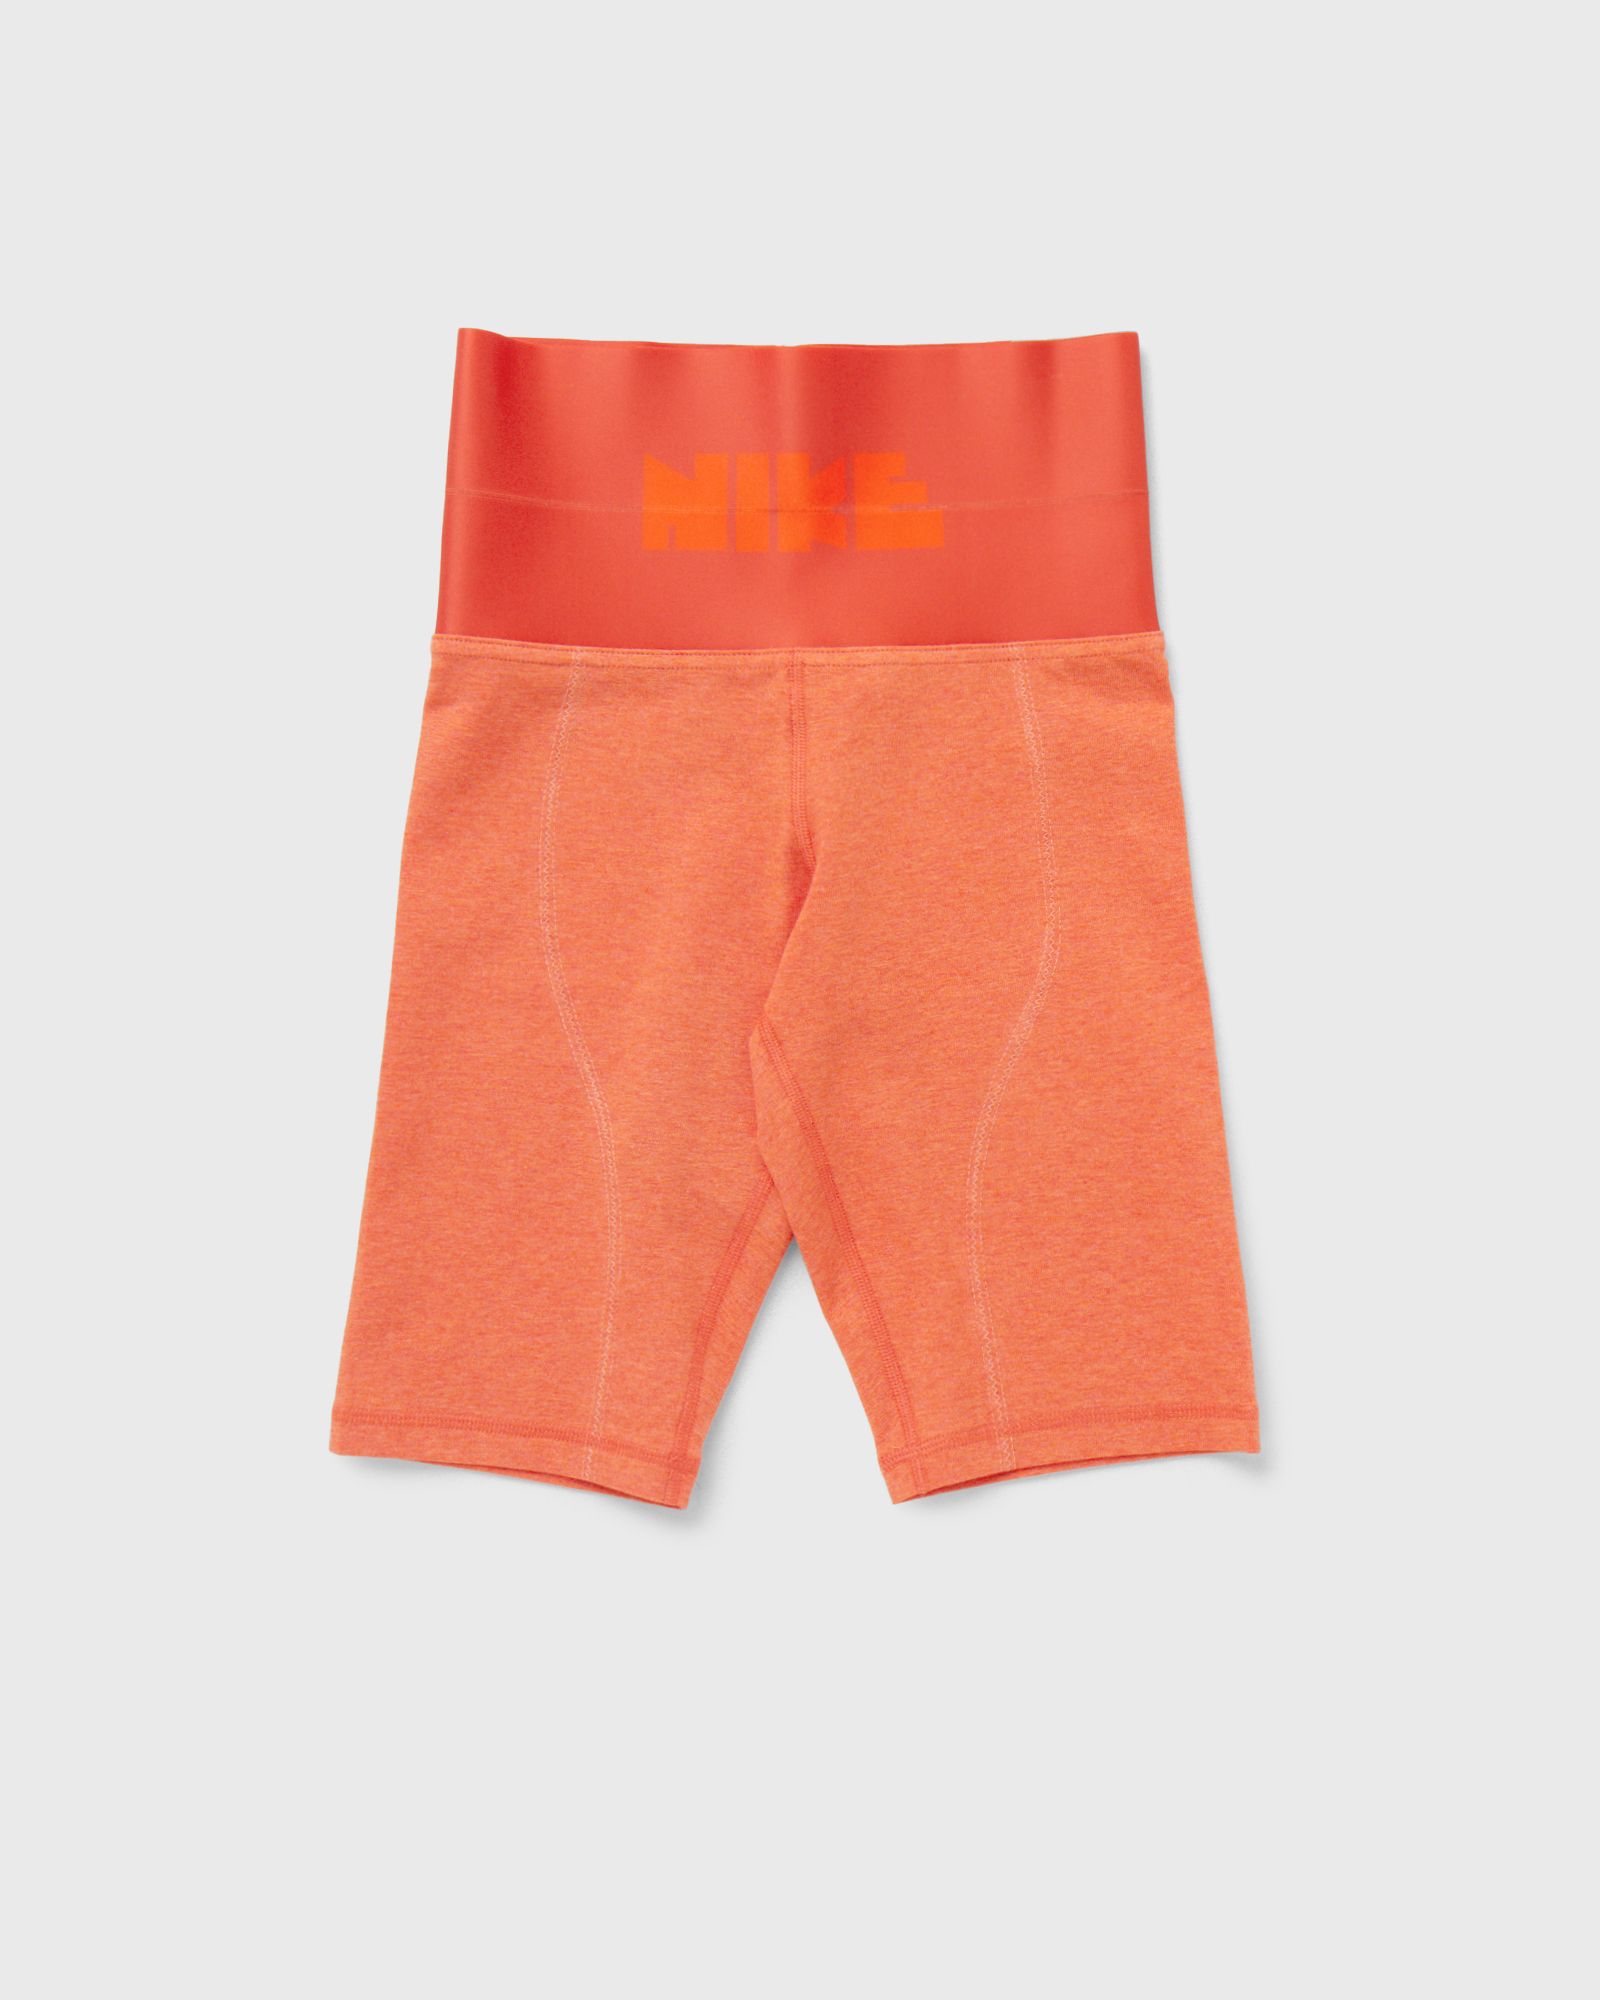 Nike - wmns circa 50 high-rise bike shorts women sport & team shorts orange in größe:xs